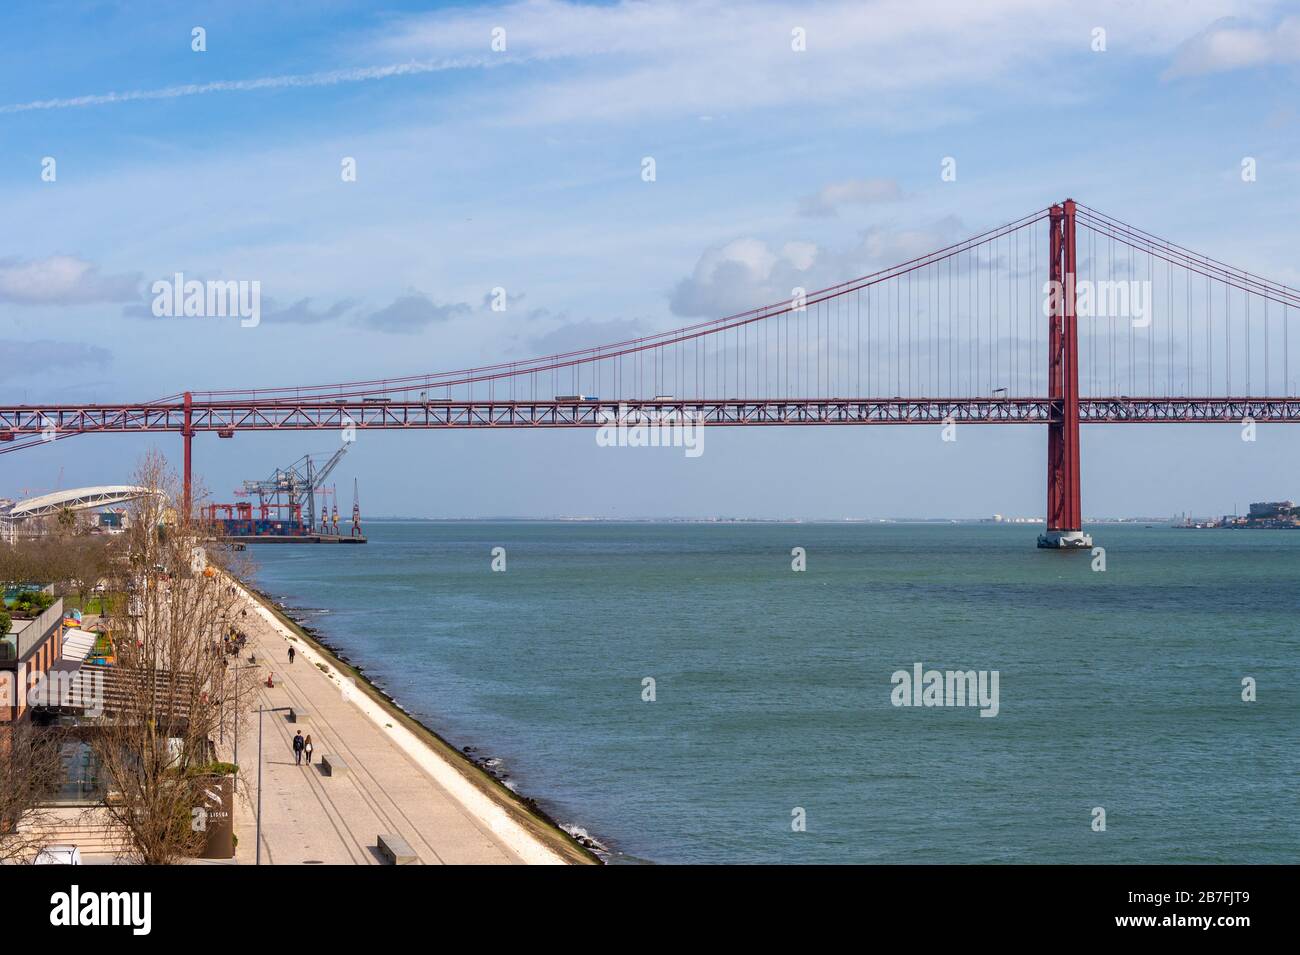 Lisbon, Portugal - 2 March 2020: The Ponte 25 de Abril Bridge in Lisbon, Portugal Stock Photo